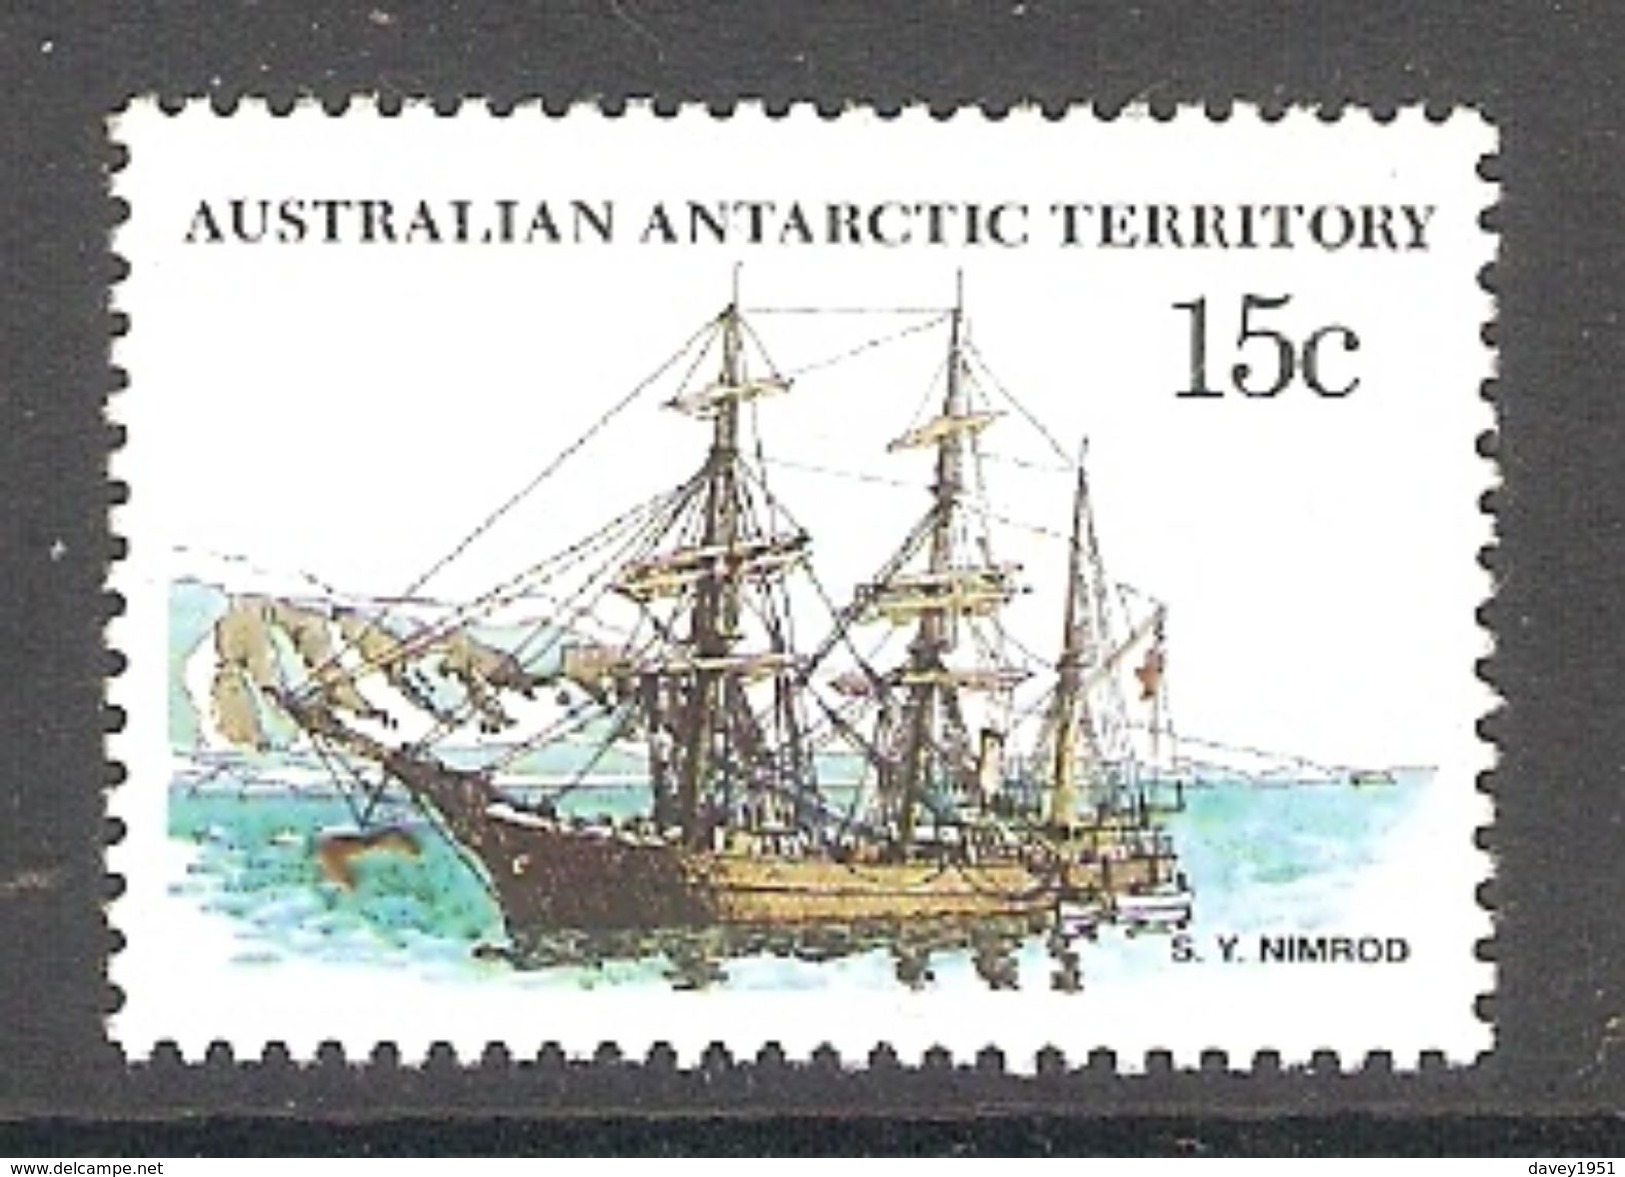 005130 Australian Antarctic Territory 1979 15c MNH - Unused Stamps